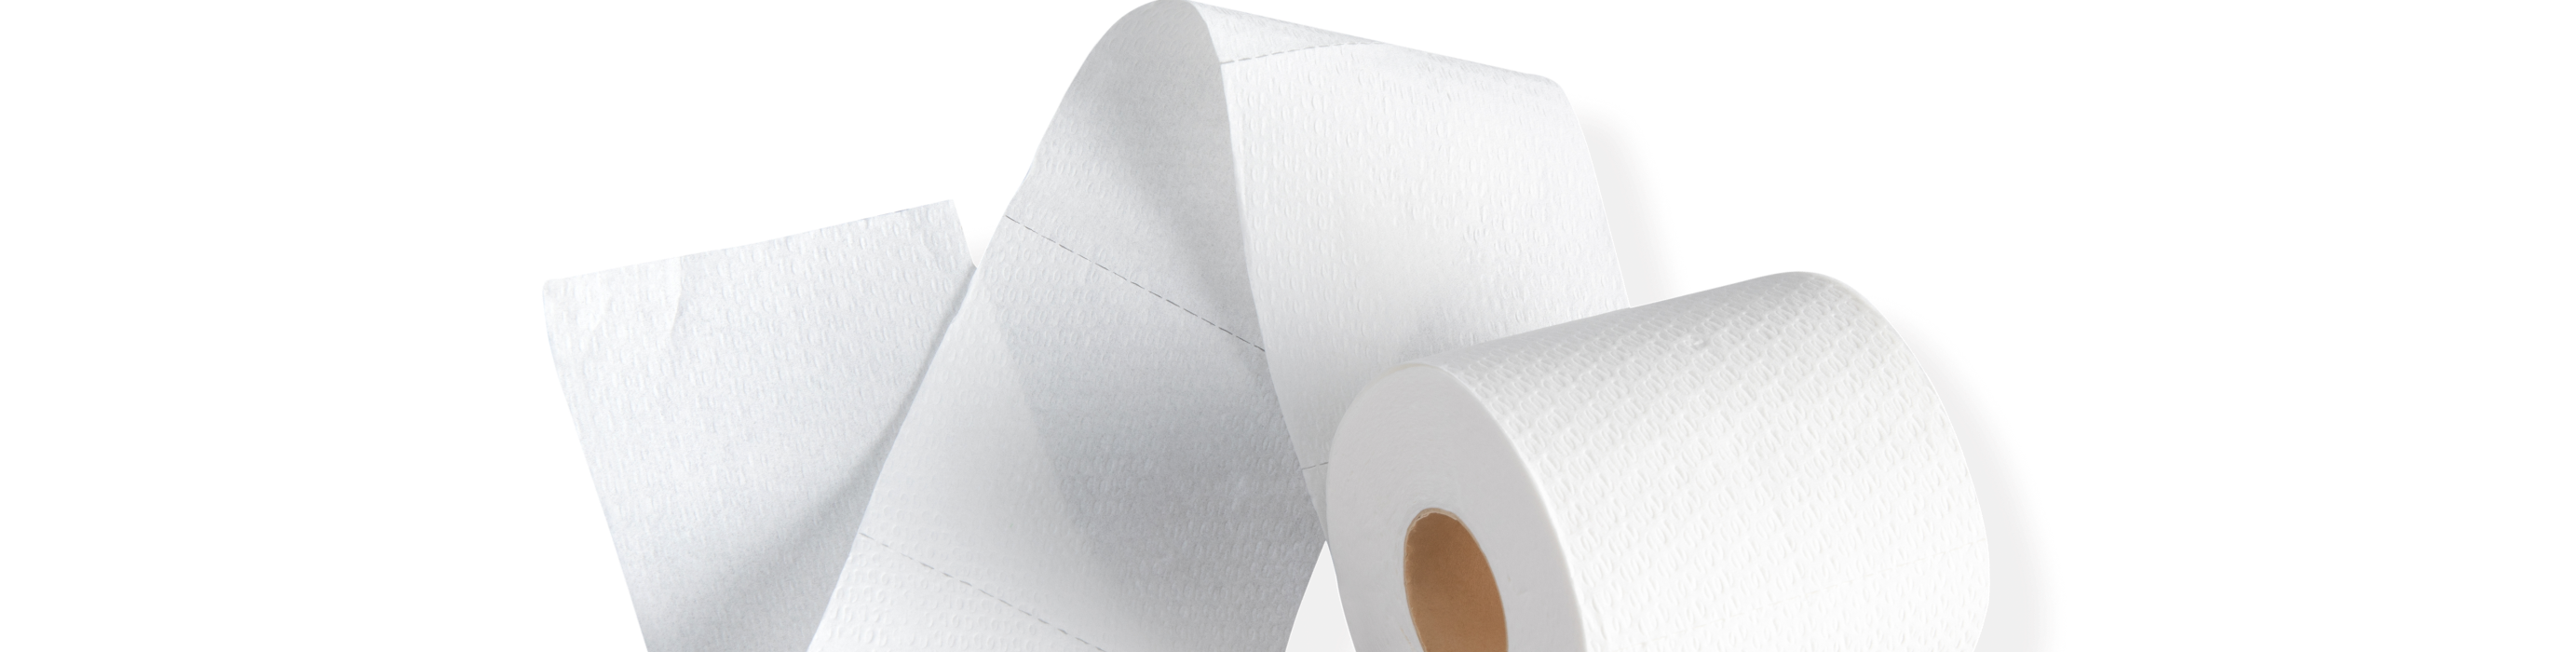  Reel Premium Paper Towels and Toilet Paper Bundle - 12 Recycled  Paper Towels and 24 Rolls of Premium Bamboo Toilet Paper : Health &  Household